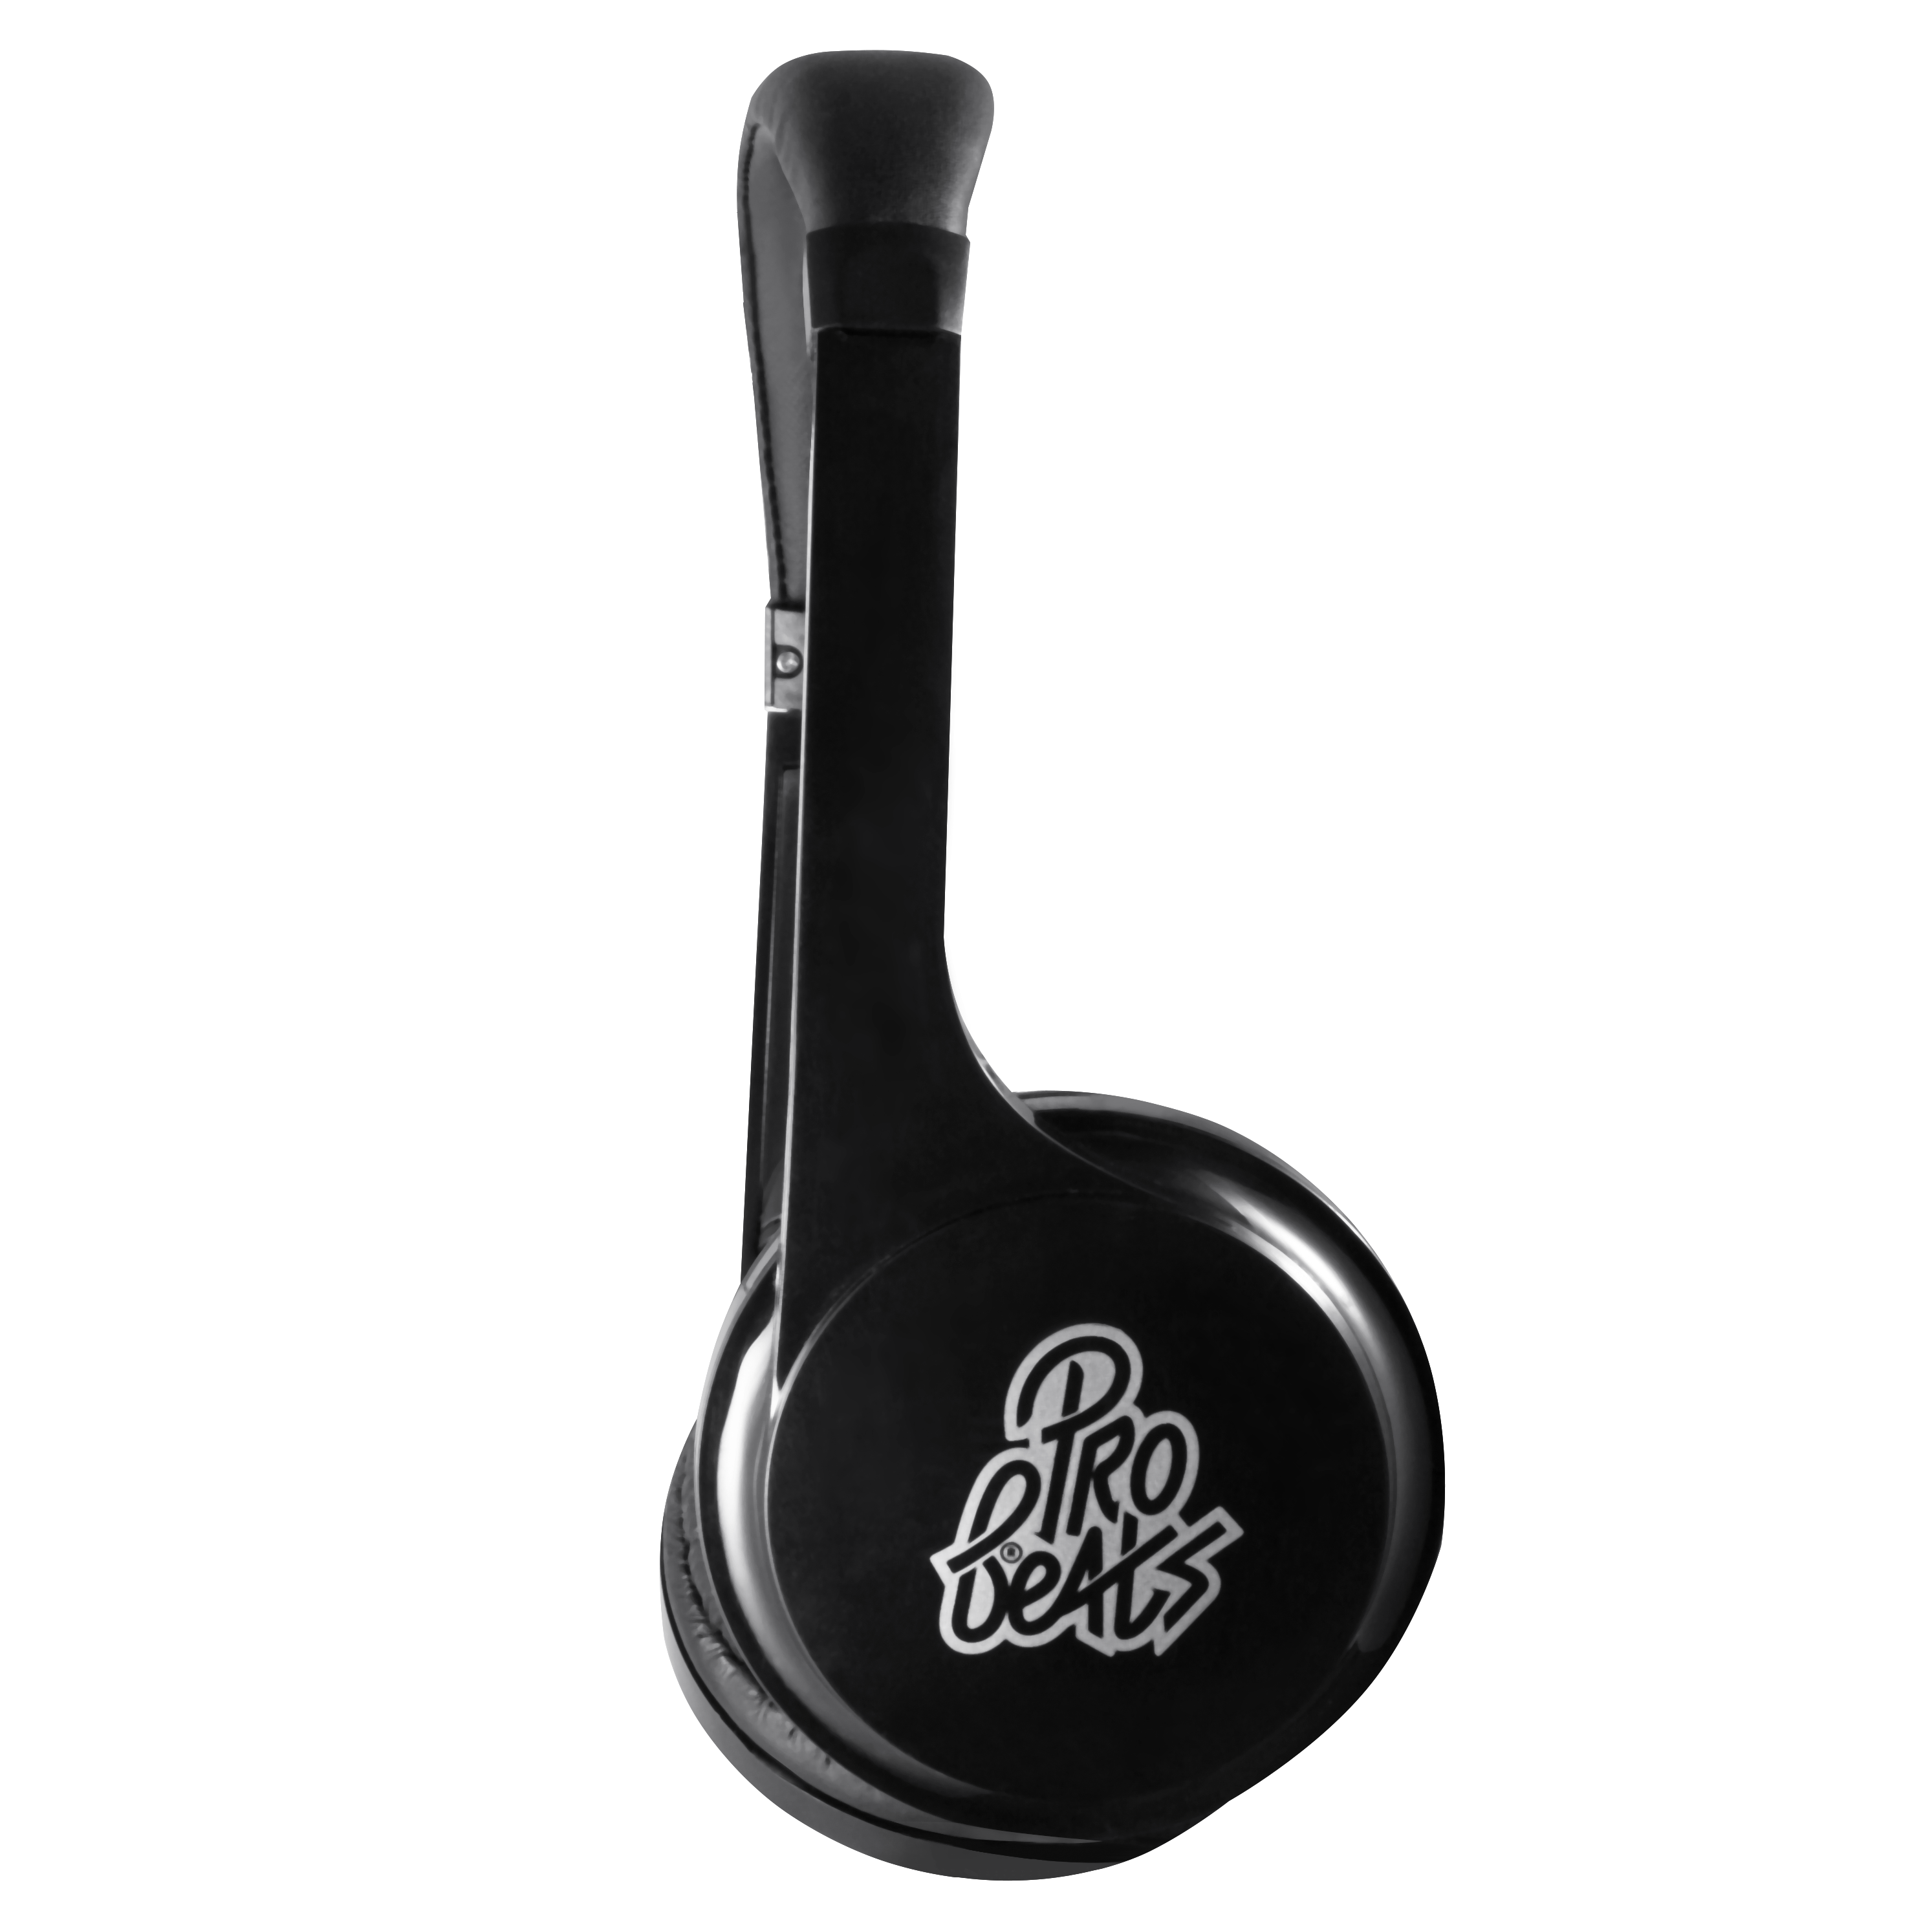 Pro Bass Elevate Aux Headphone Black